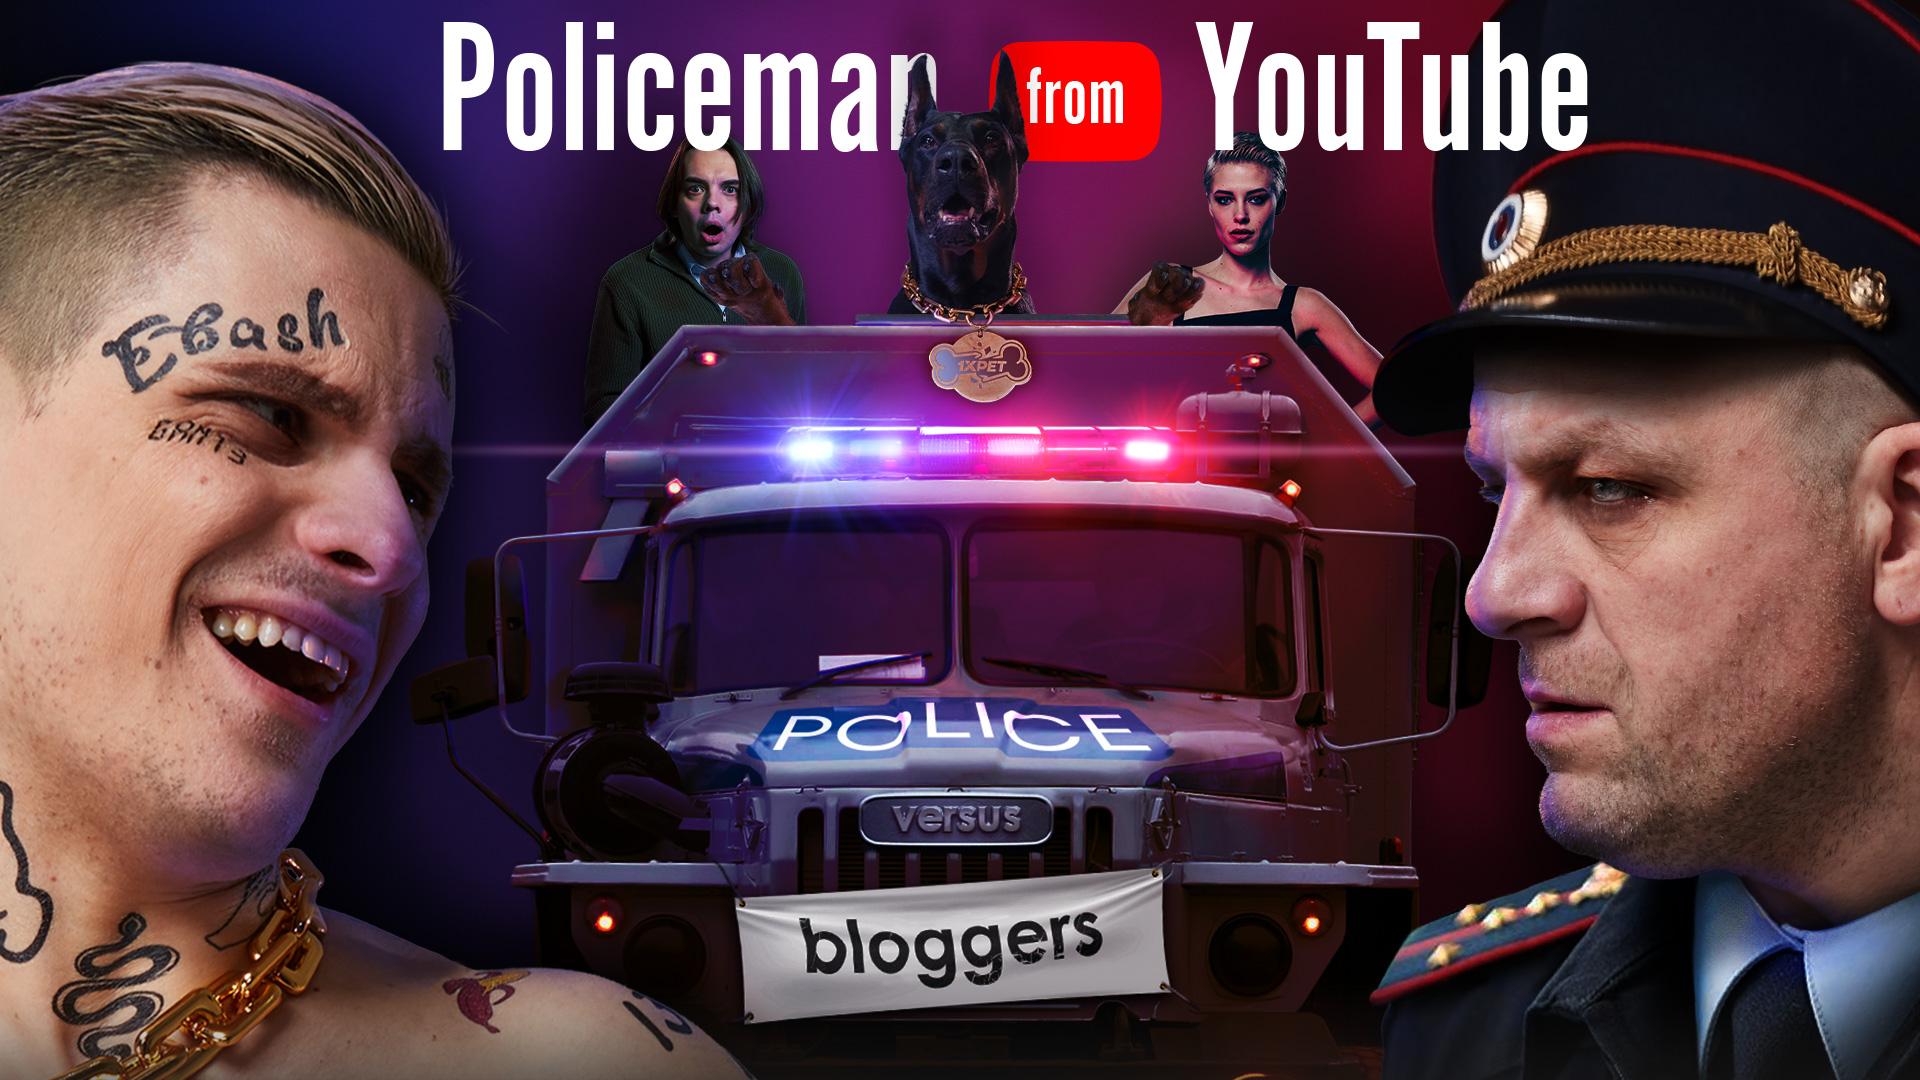 YouTube Policeman